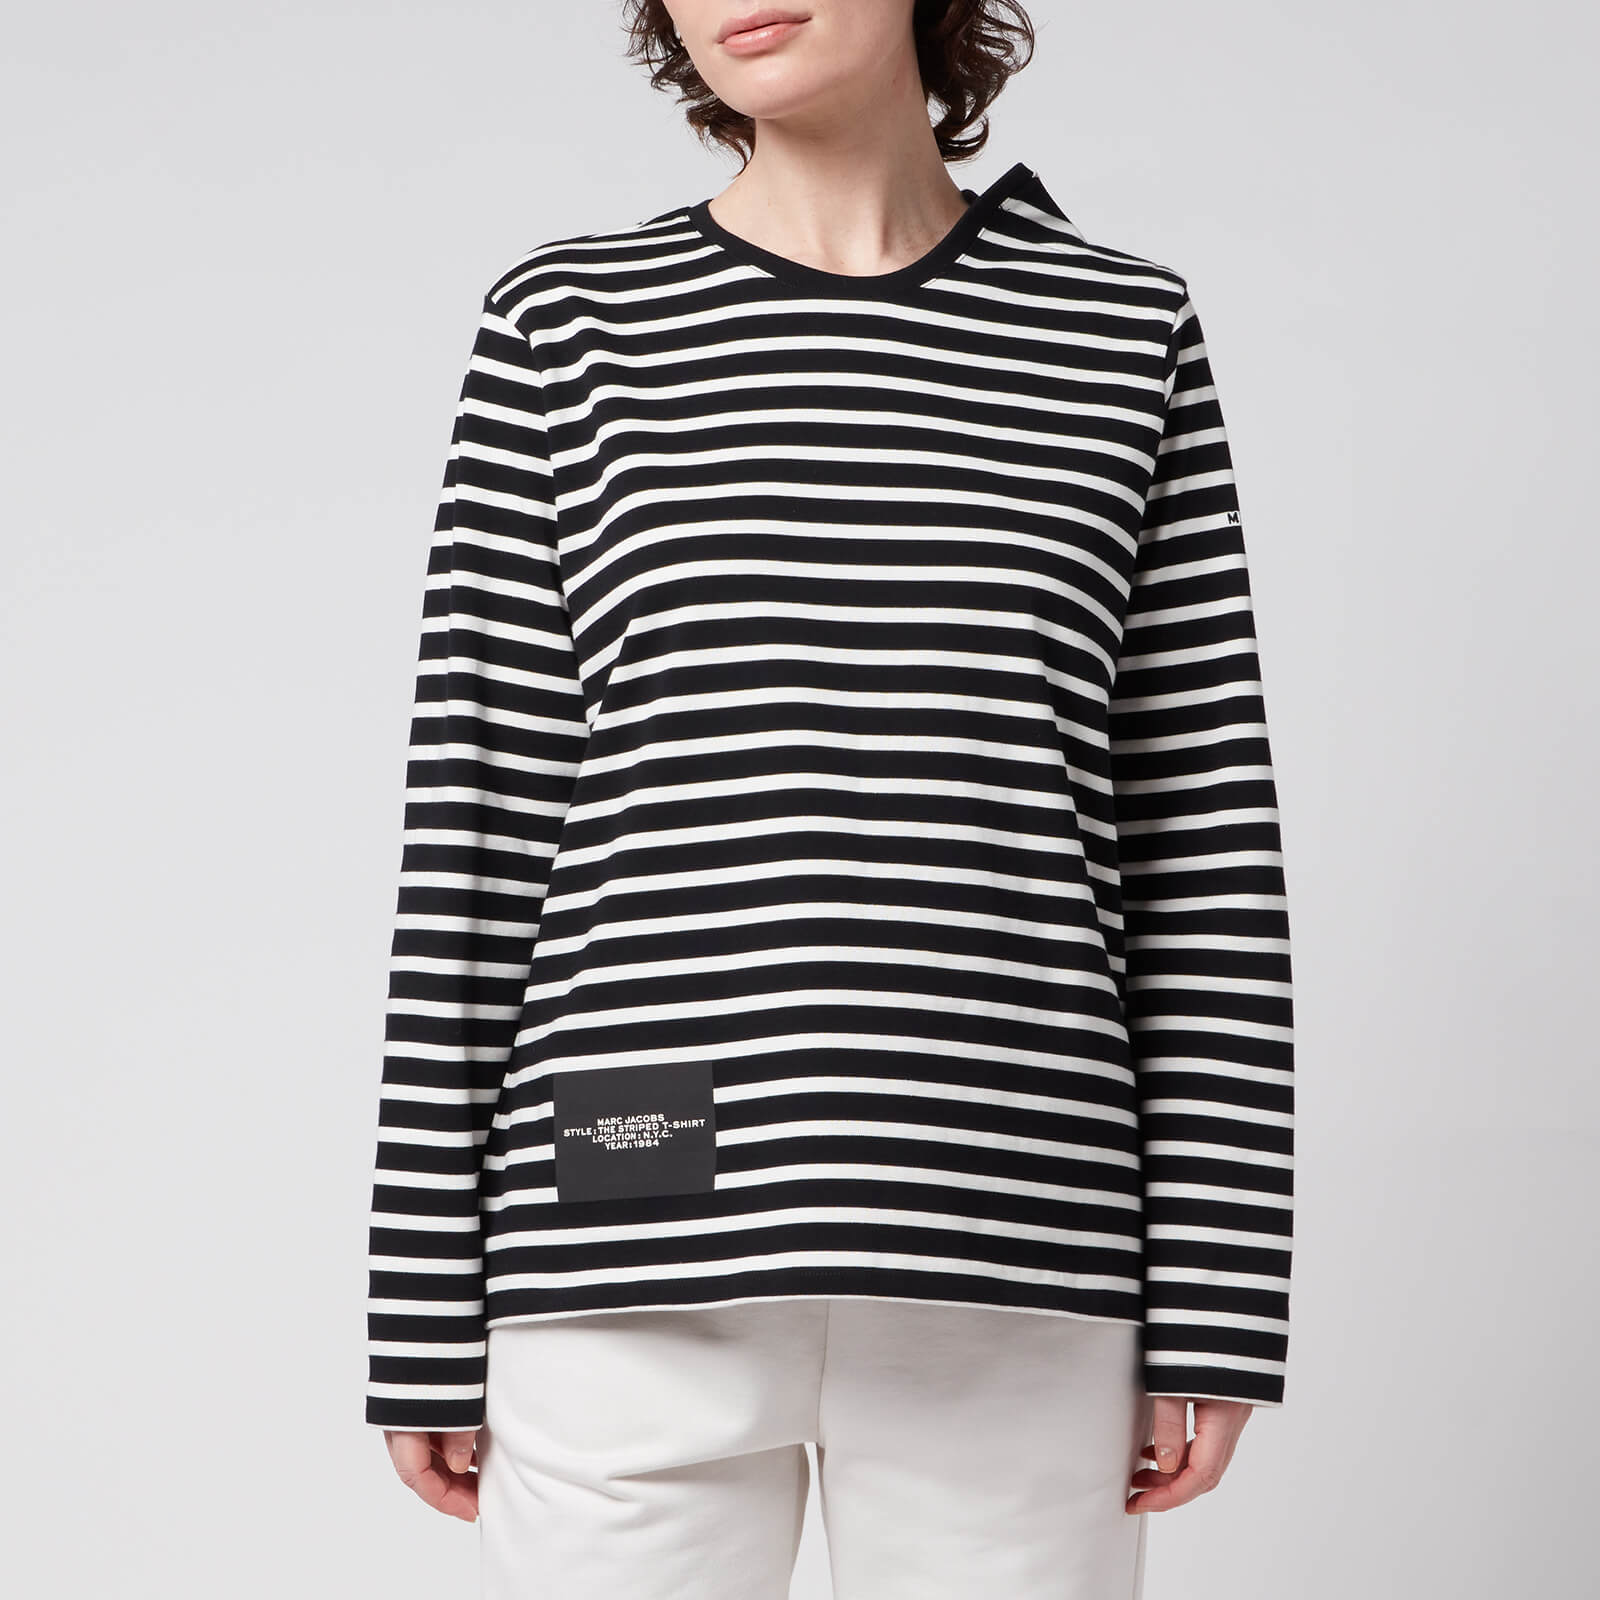 Marc Jacobs Women's The Striped T-Shirt - Black Multi - XS